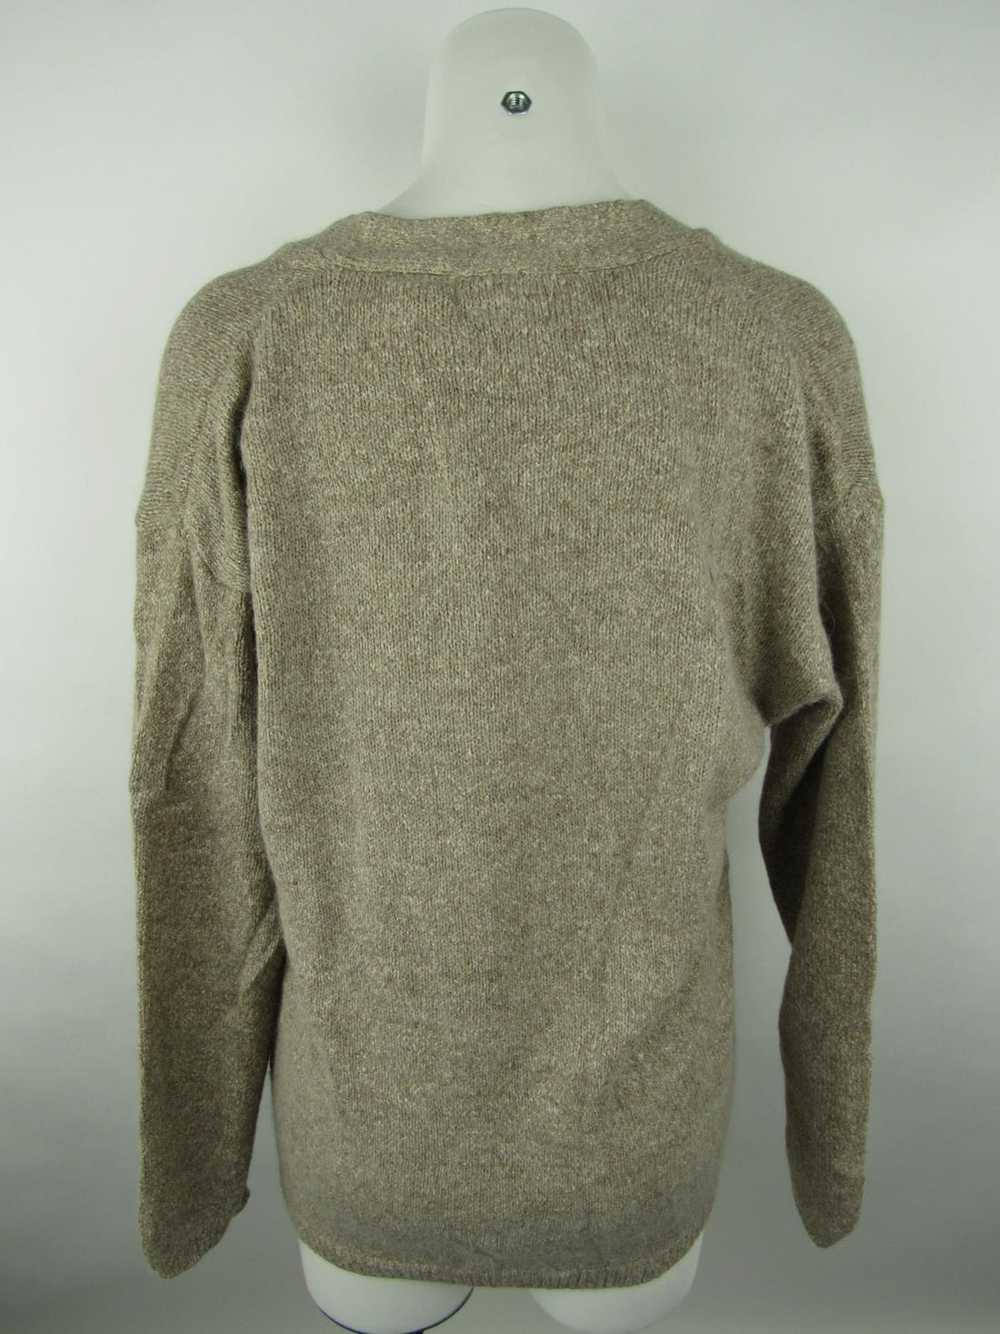 T.R. Bentley Cardigan Sweater - image 2